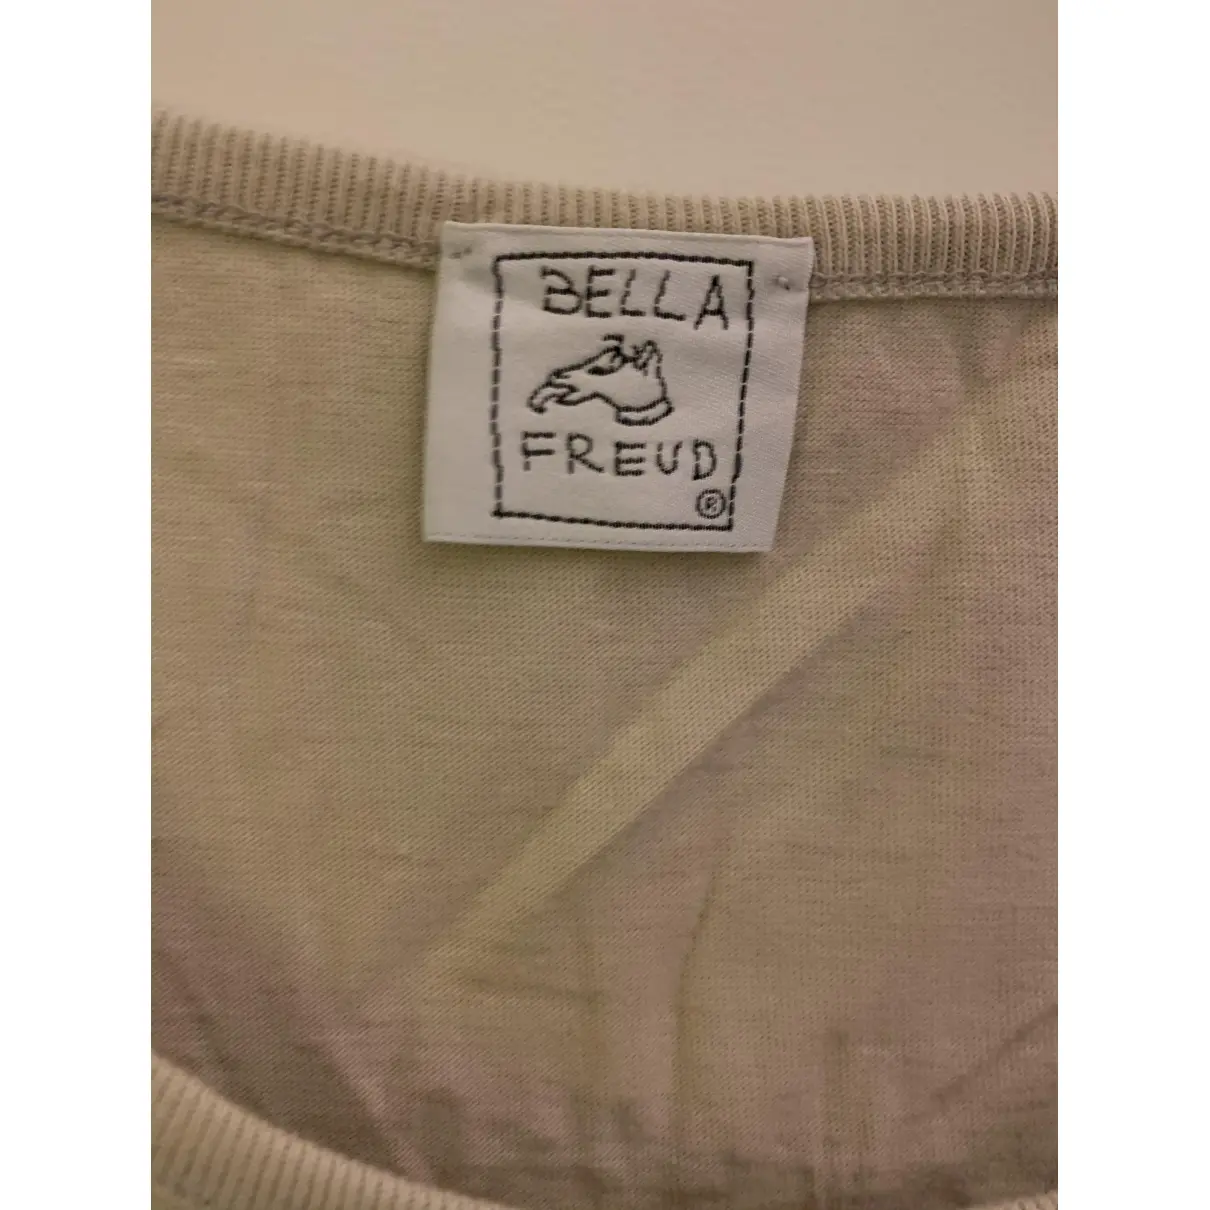 Buy Bella Freud Vest online